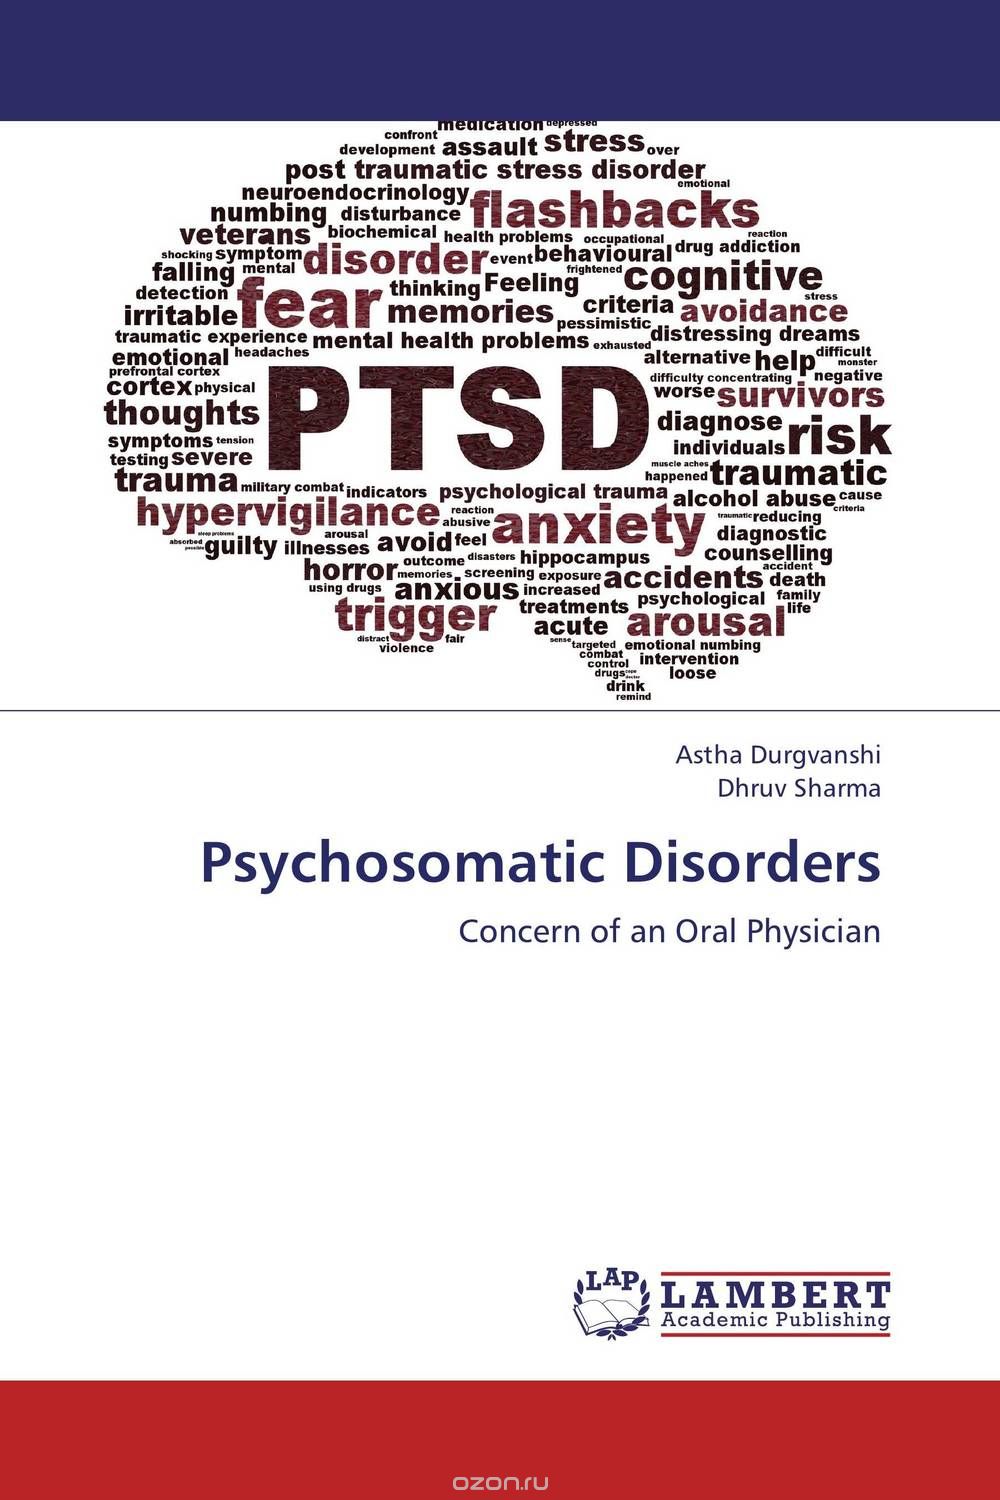 Скачать книгу "Psychosomatic Disorders"